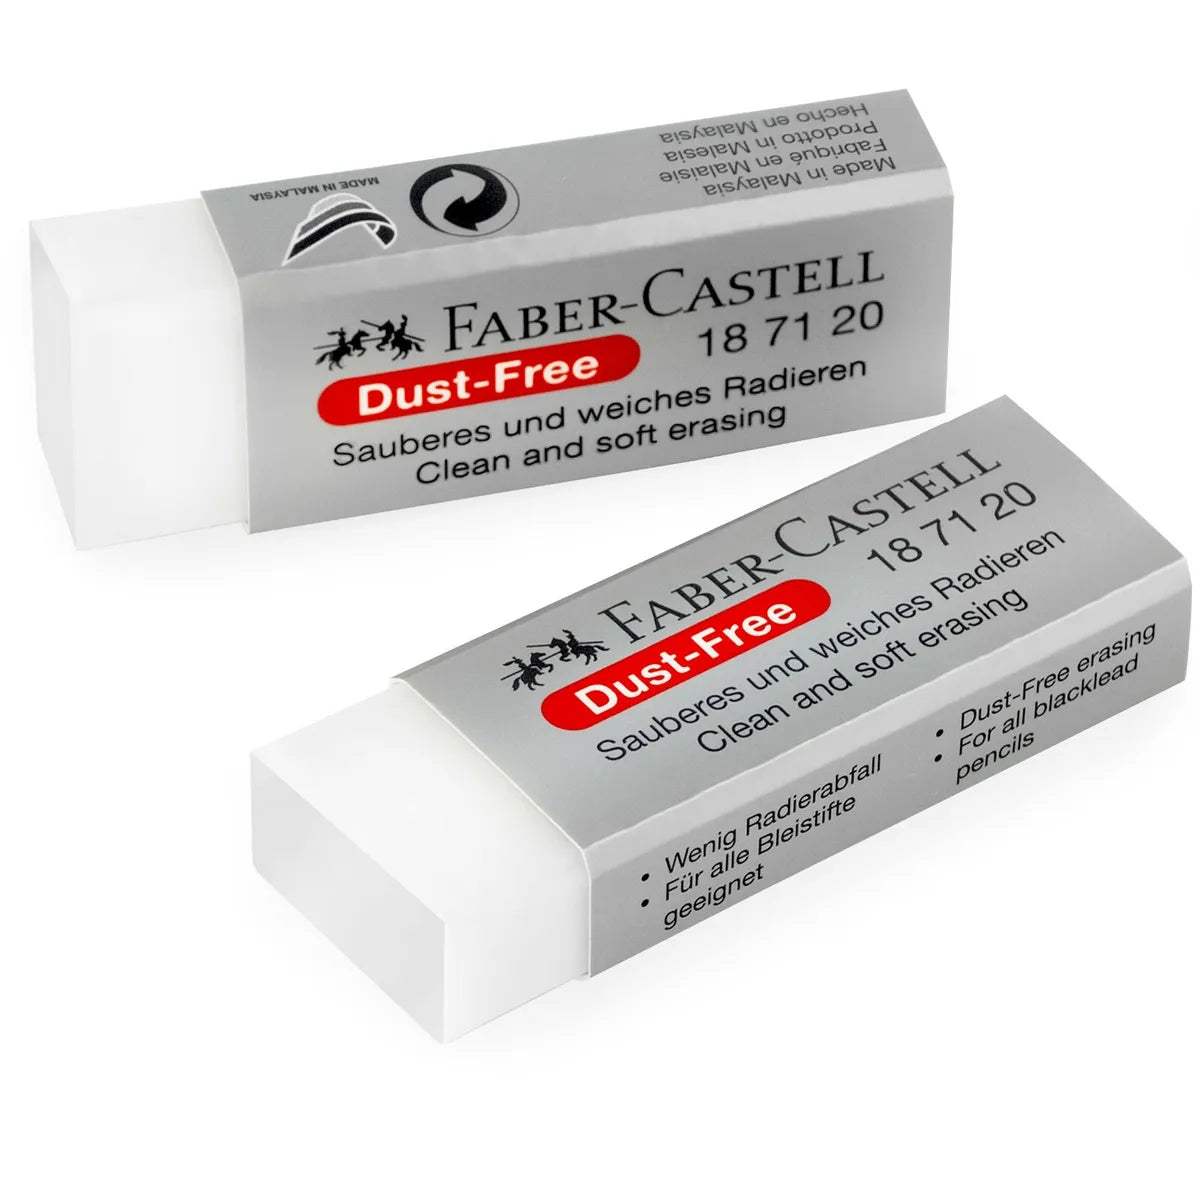 Faber Castell Dust-Free Vinyl Eraser  Curio. Gallery & Creative Supply LLC